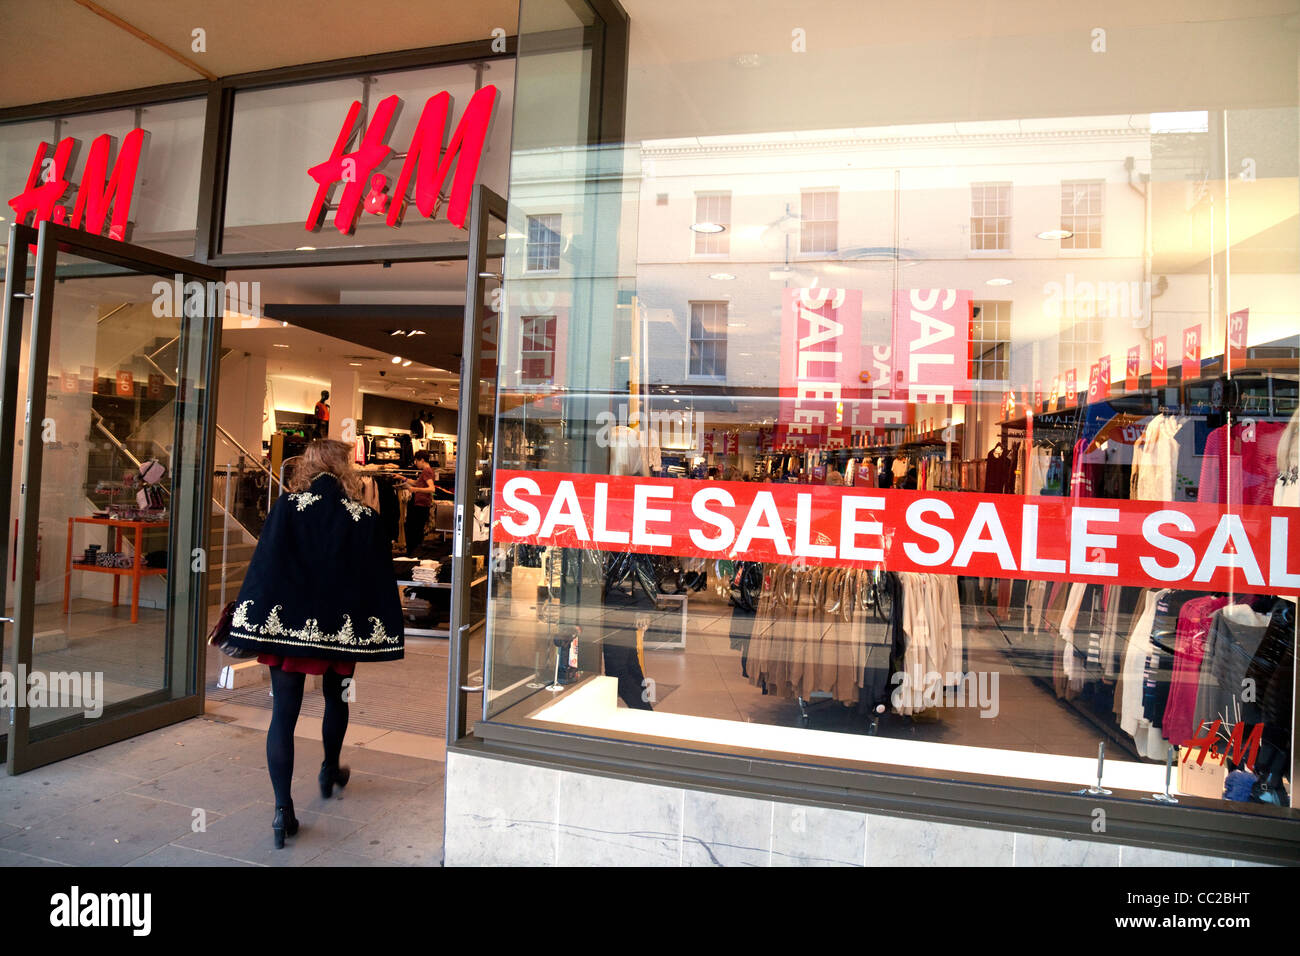 H&m France Sale Deals, 58% OFF | www.ingeniovirtual.com